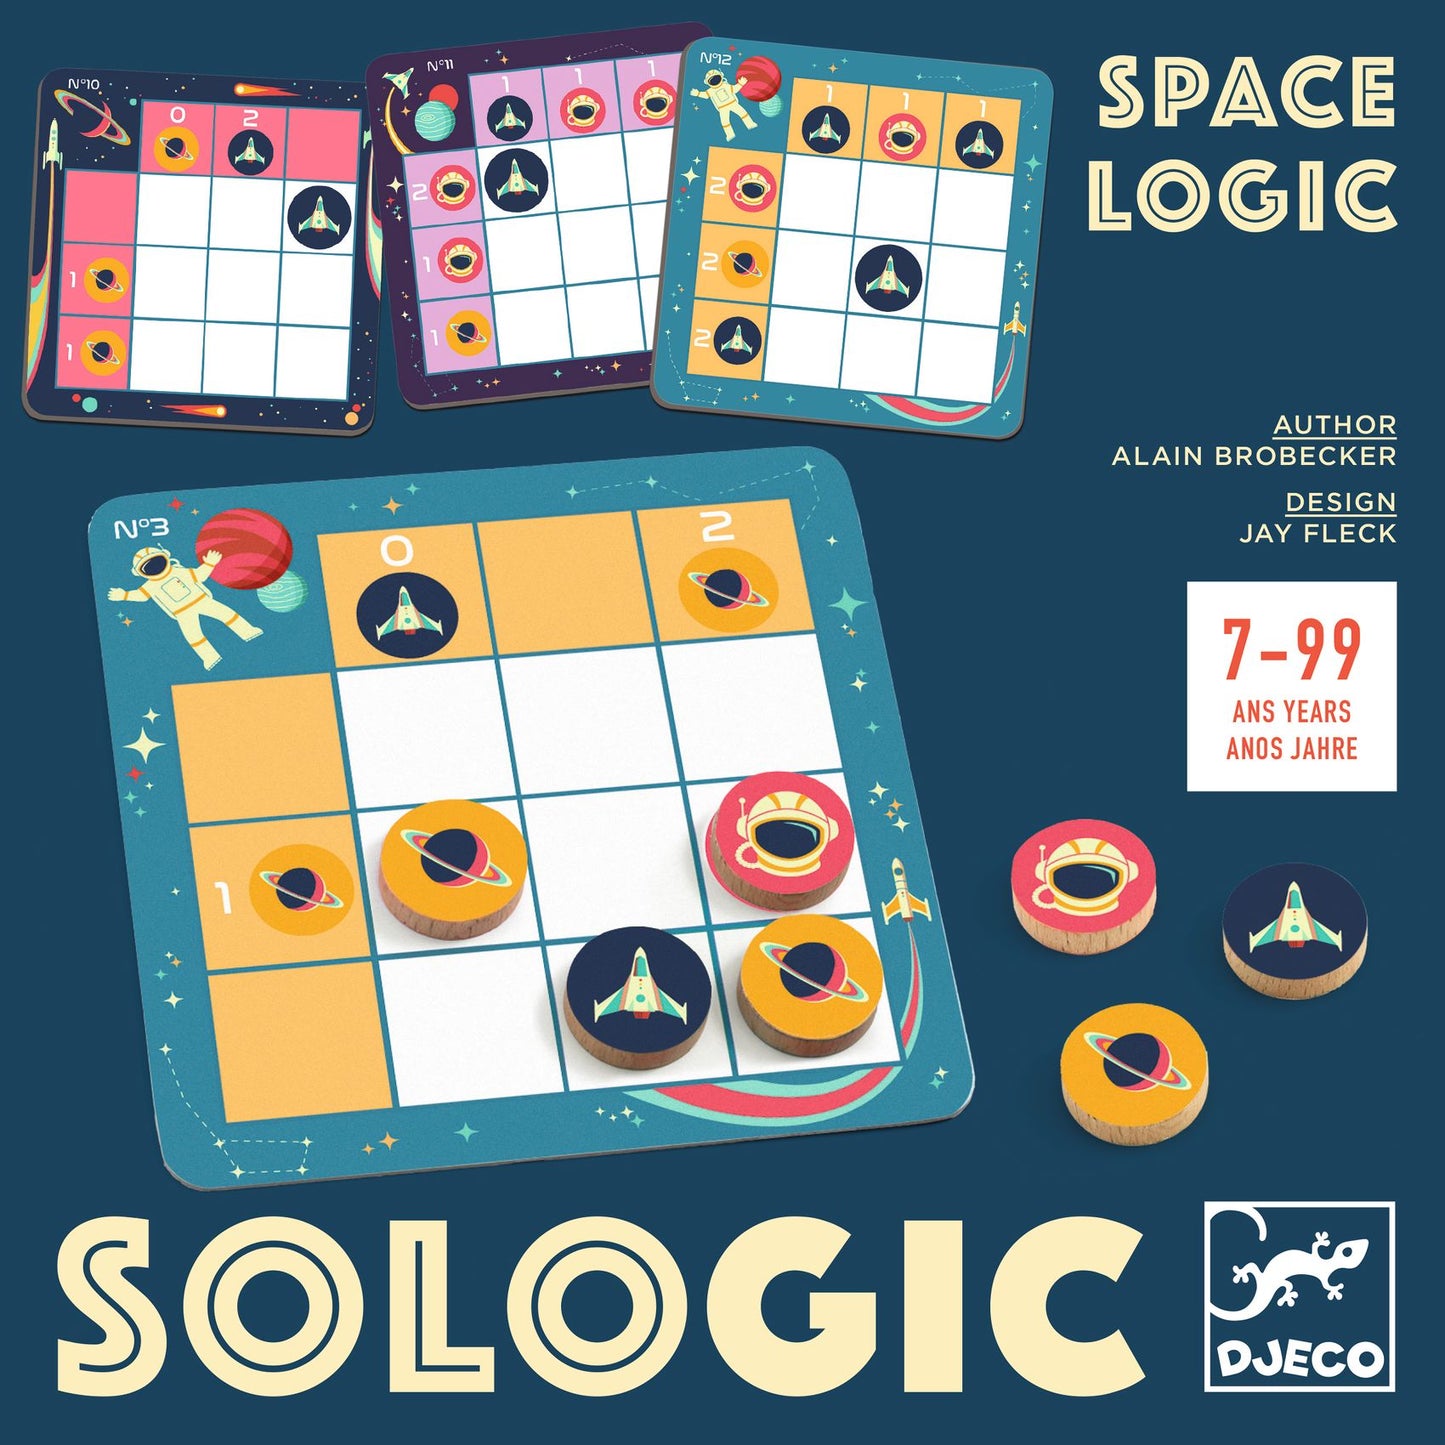 Space Logic - Sologic